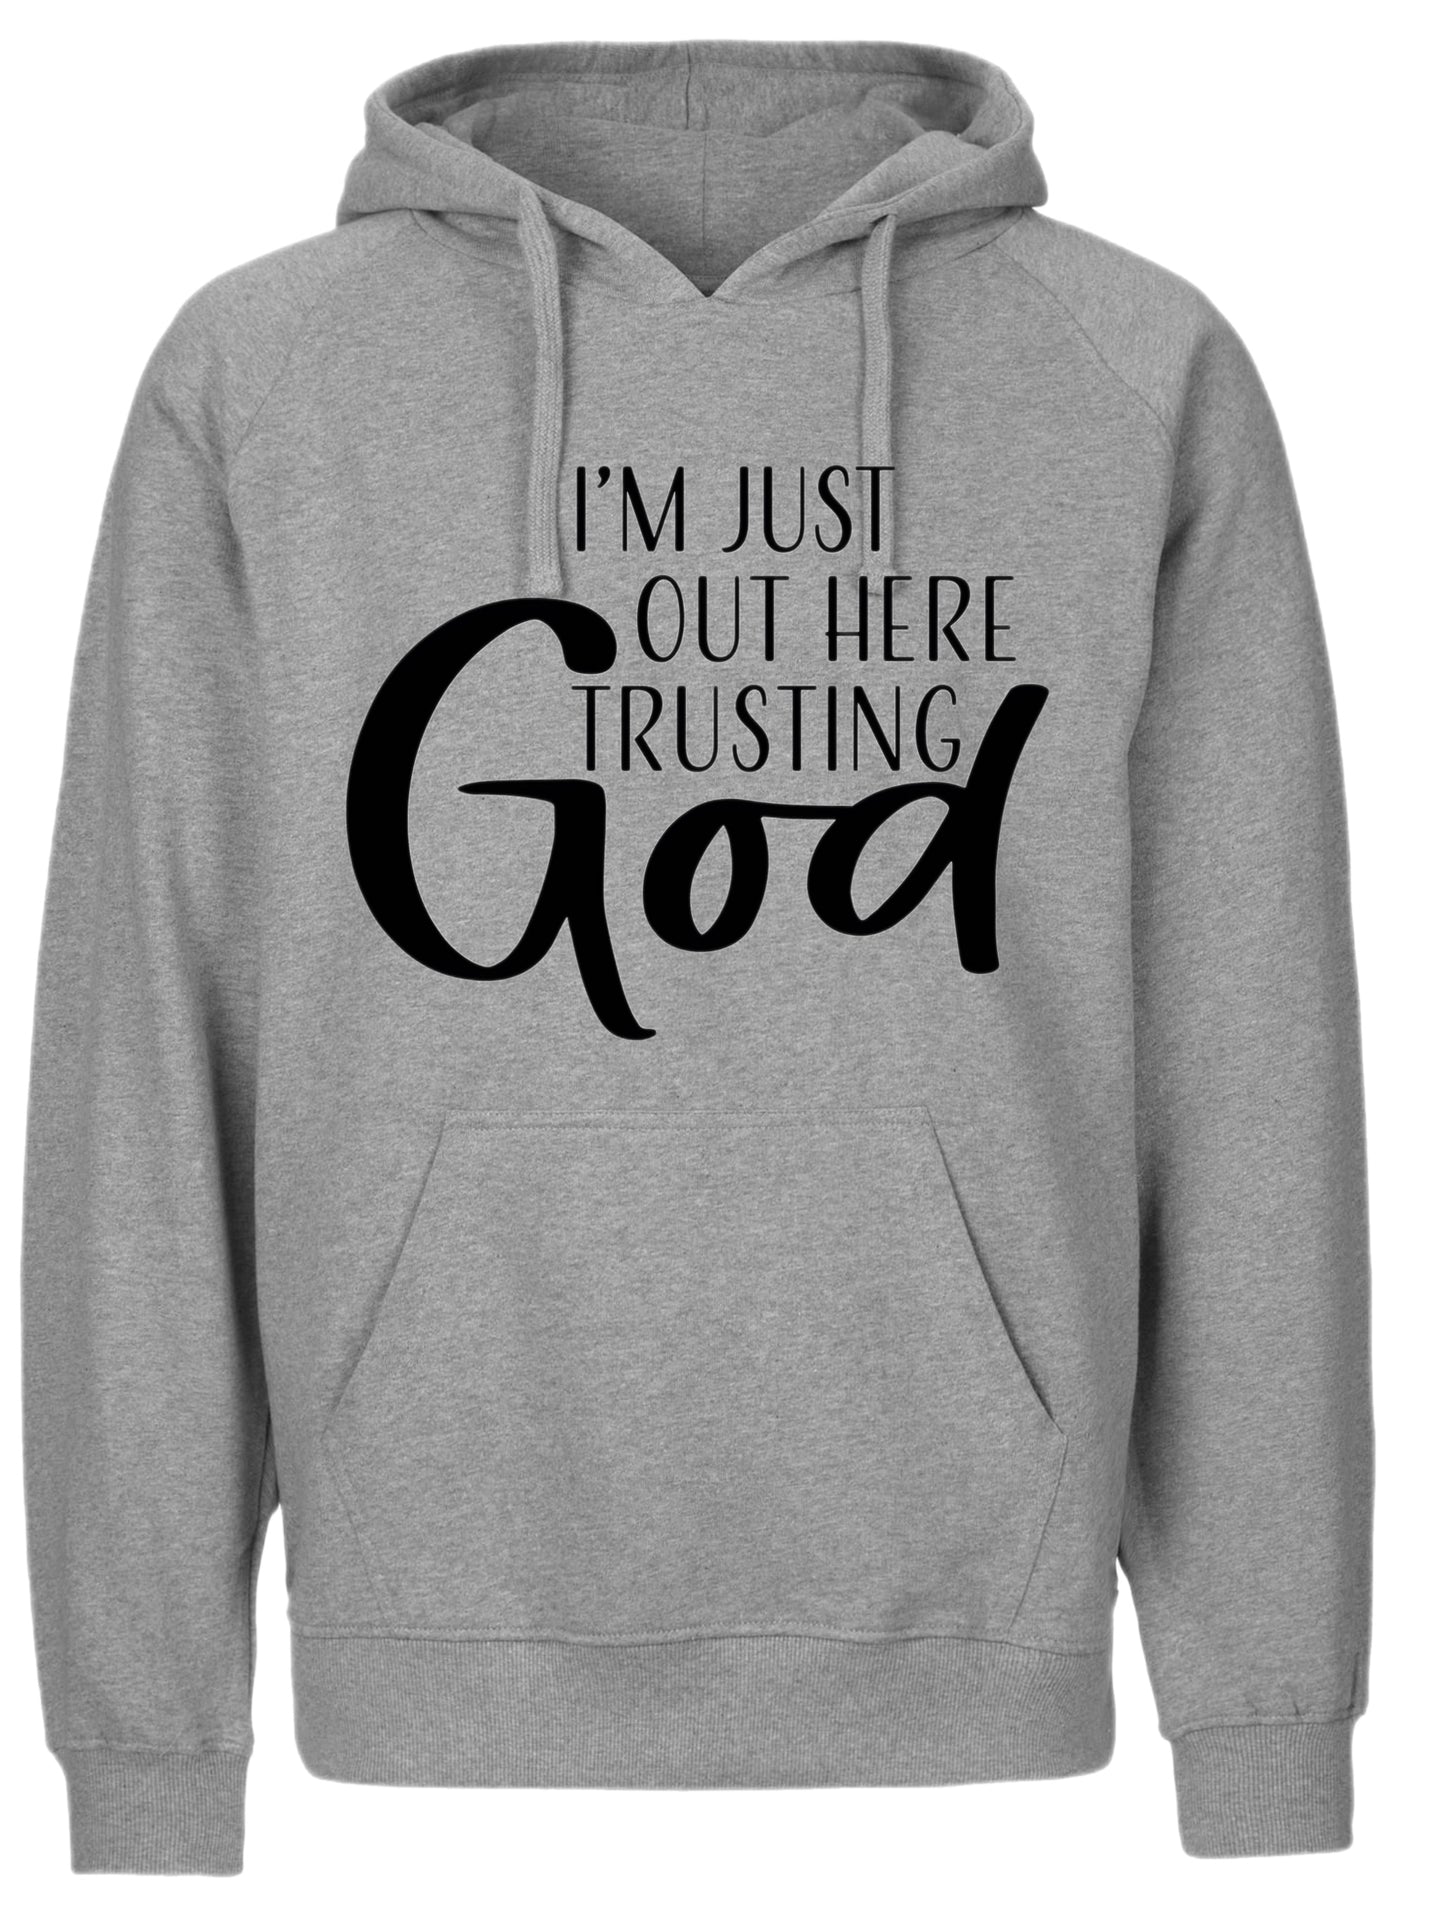 Trusting GOD Print